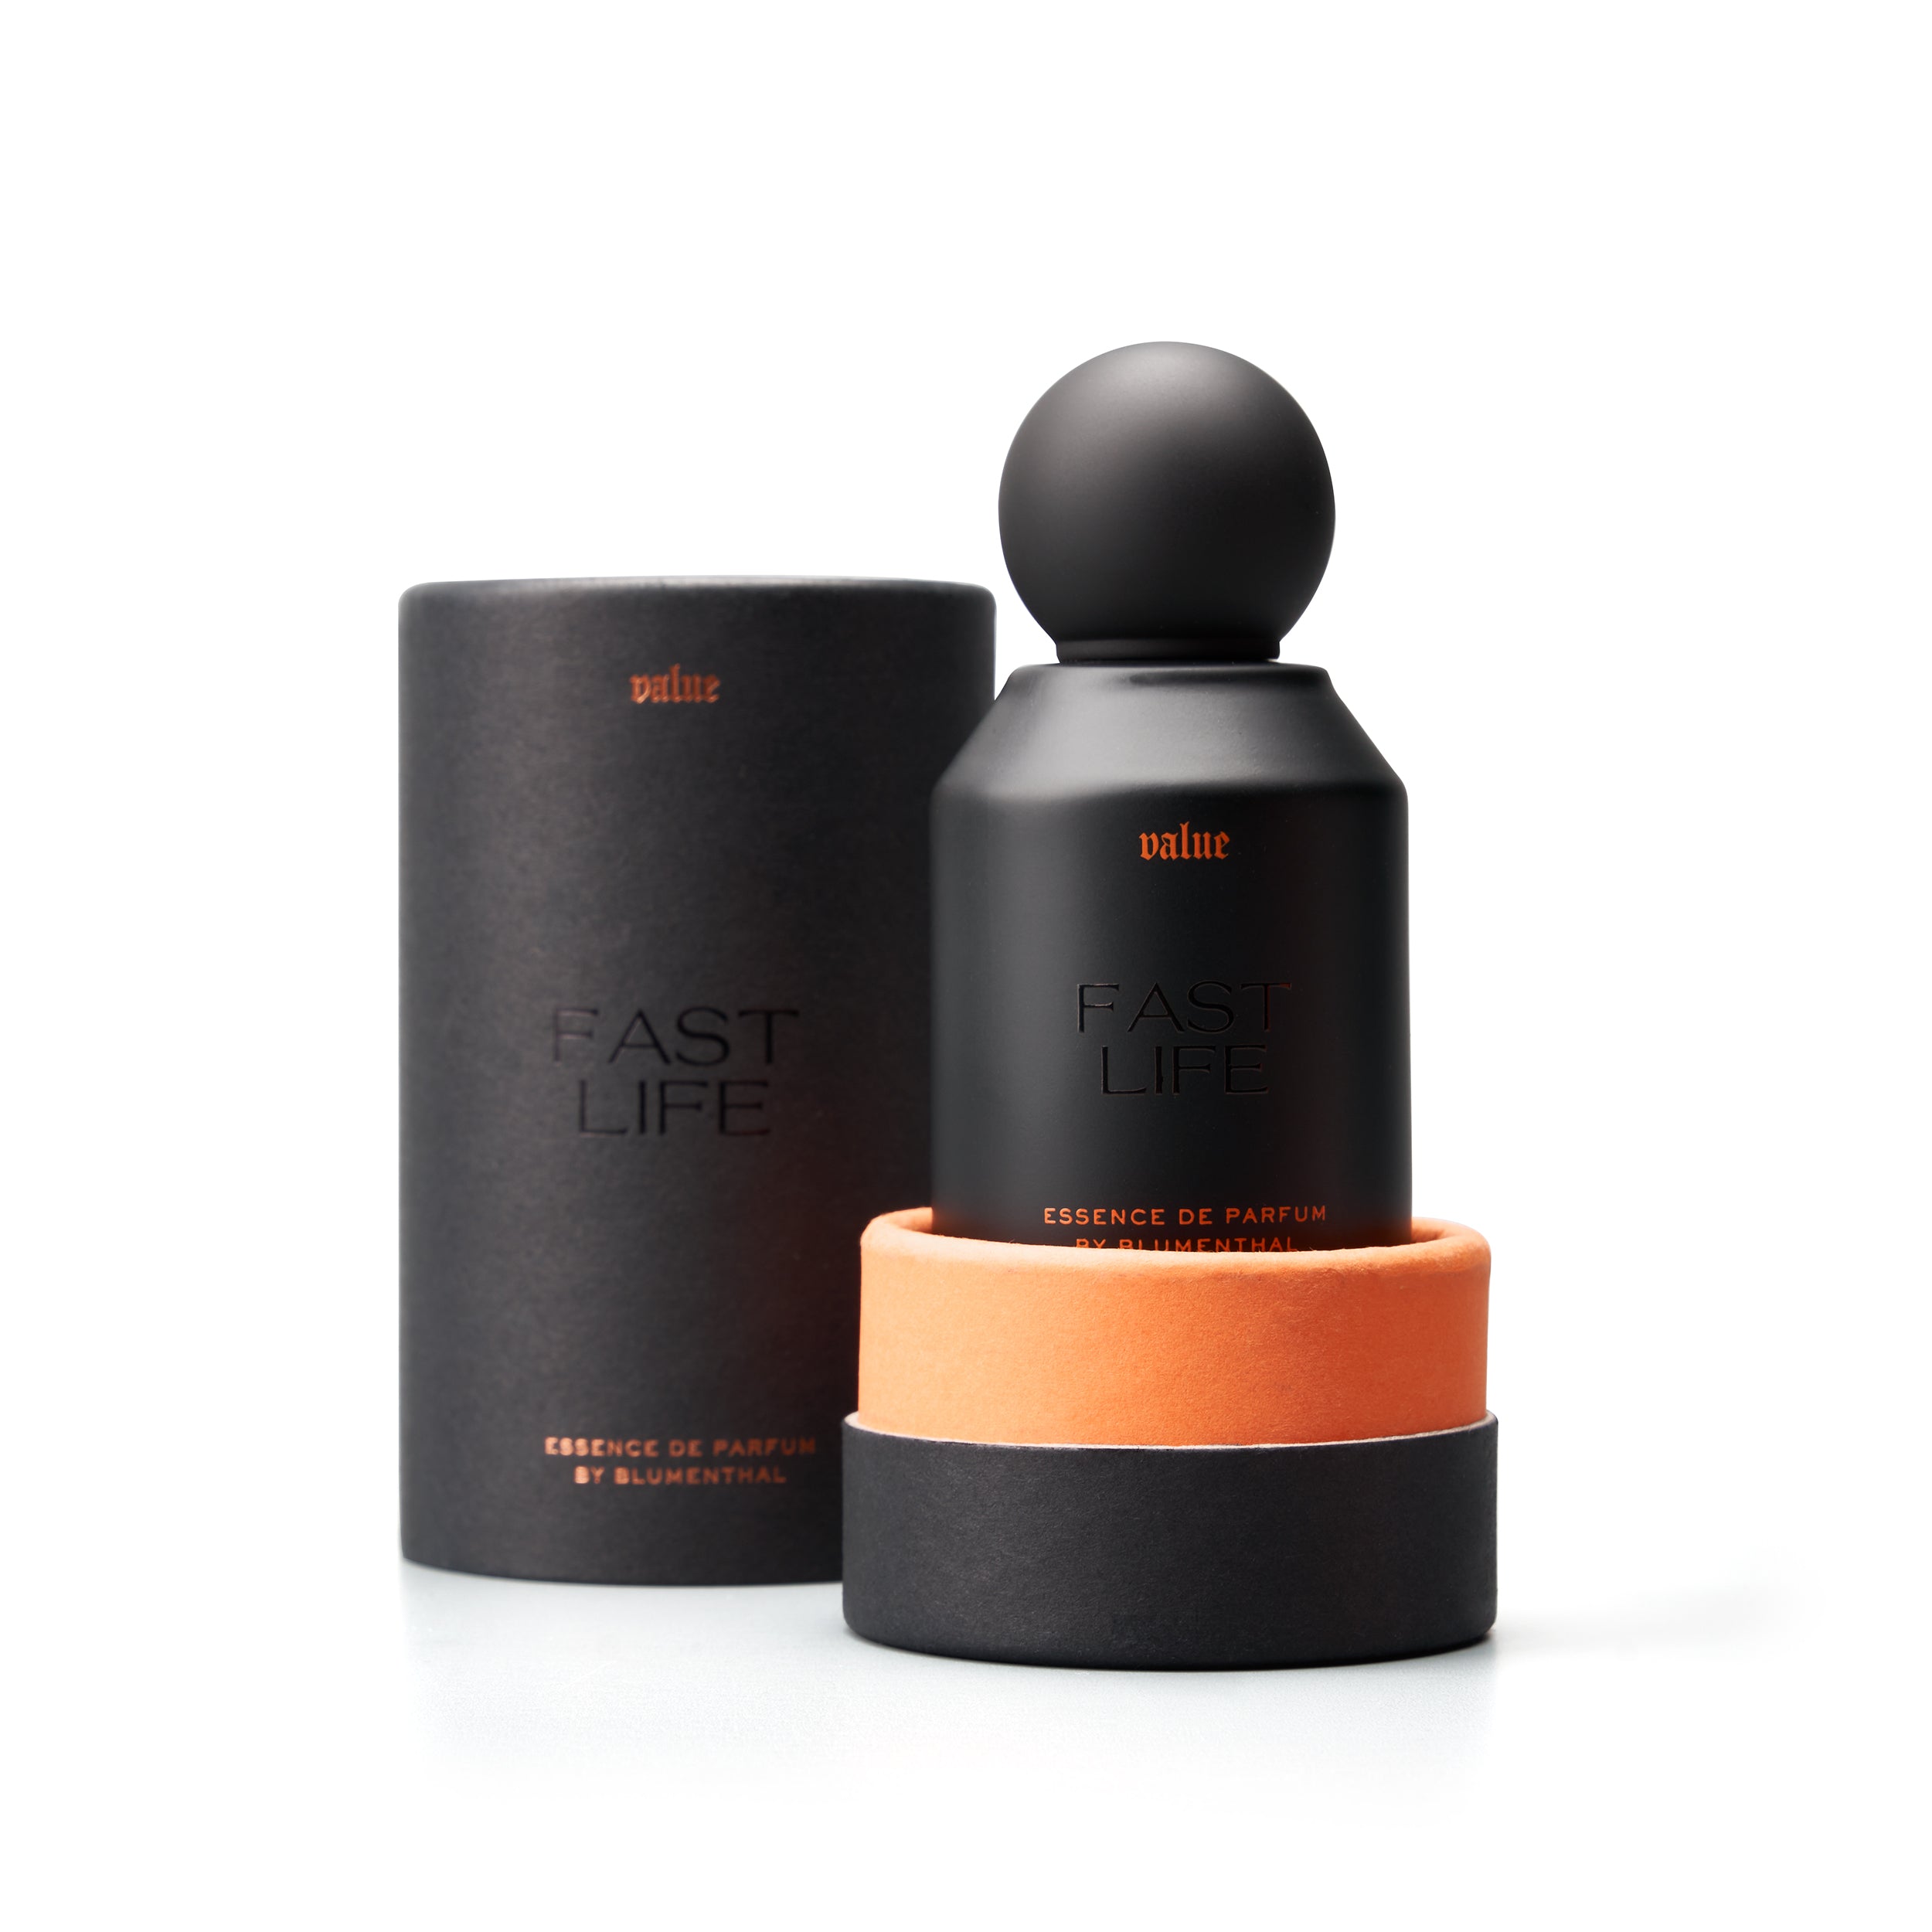 "Fast Life" Essence de Parfum